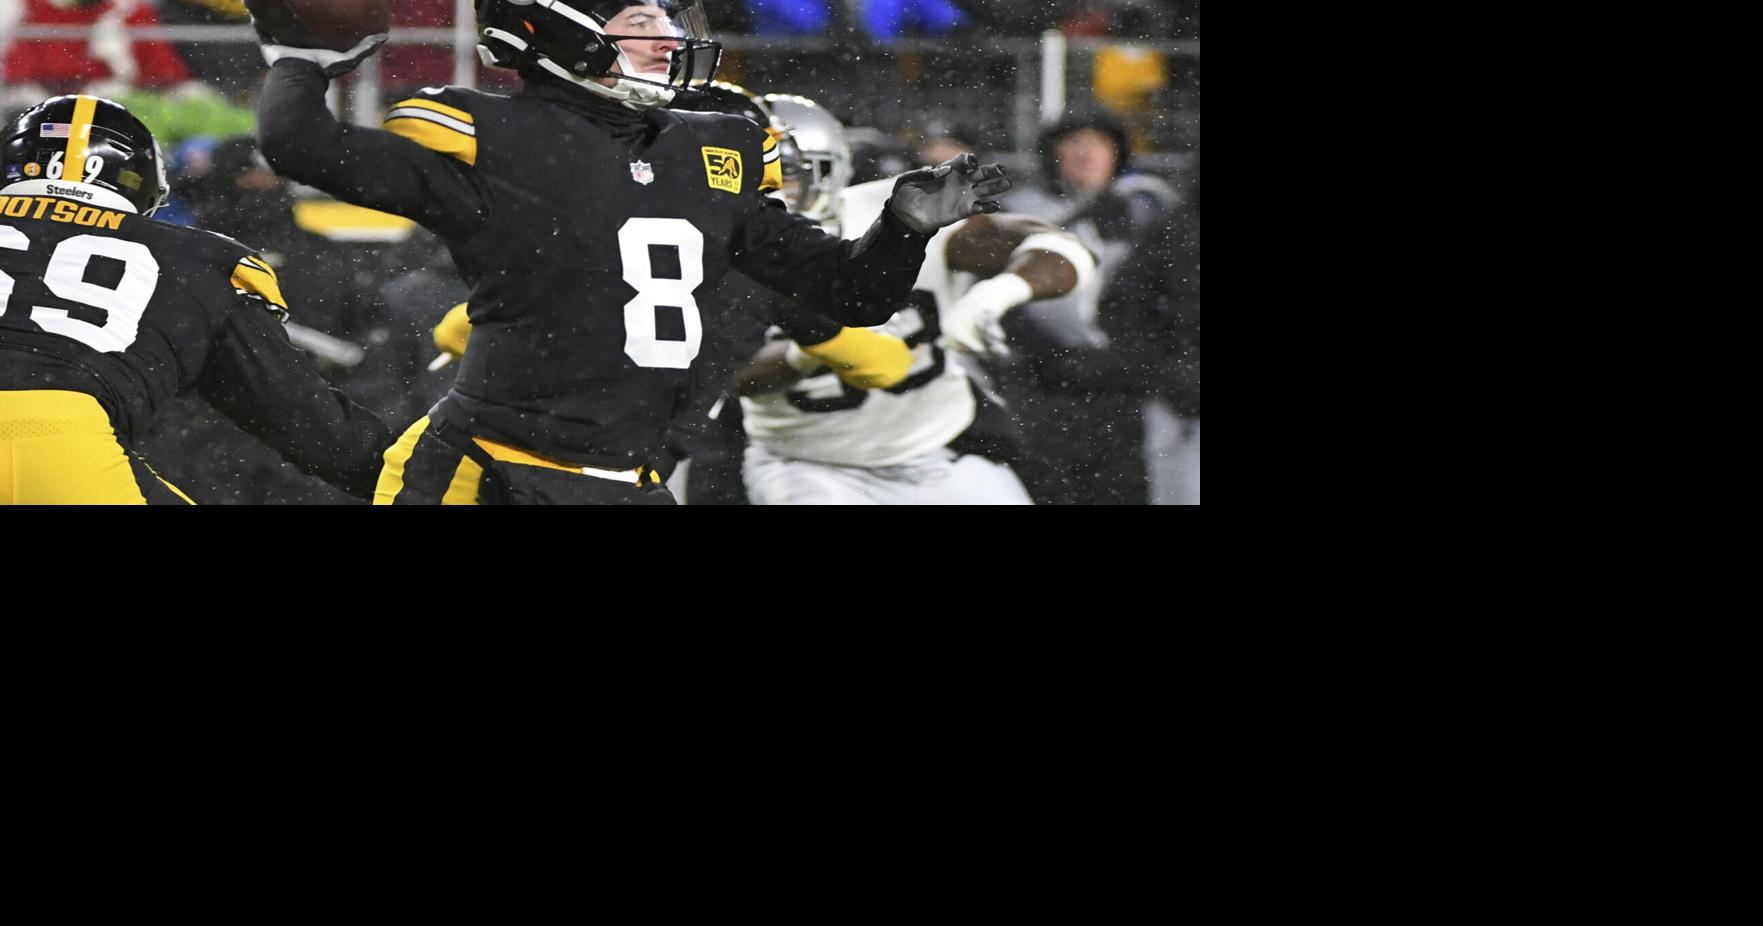 Steelers honor Franco Harris by rallying past Raiders 13-10, Sports